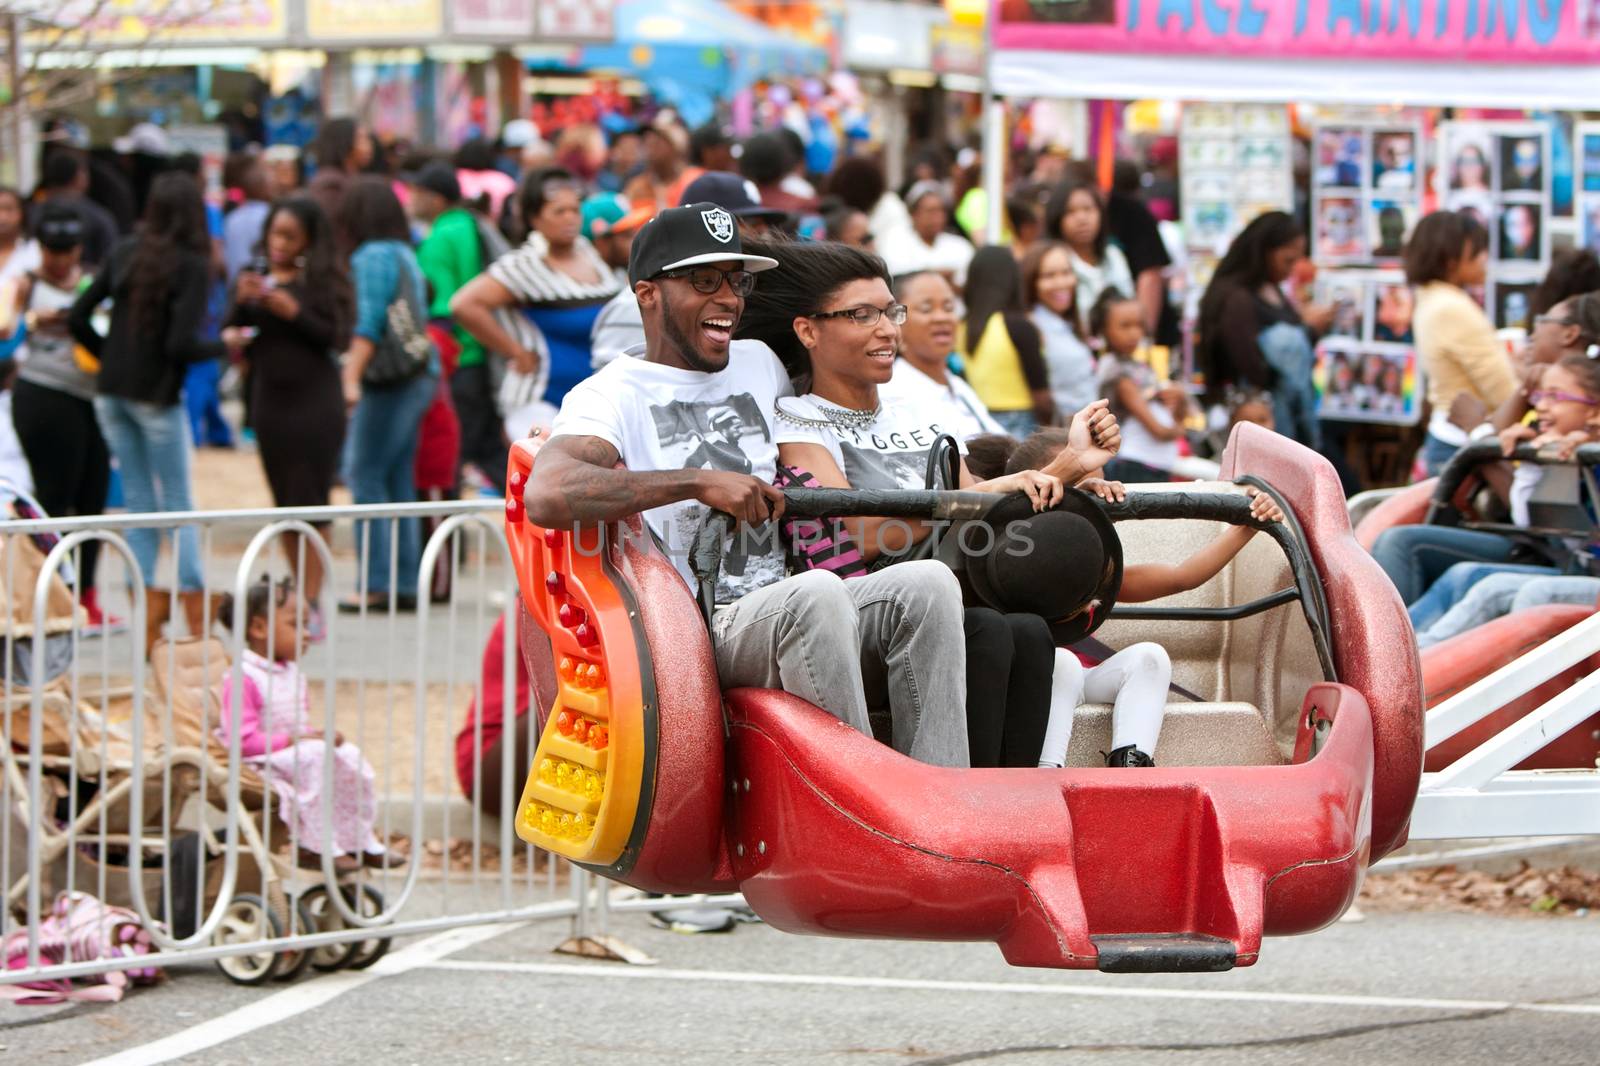 Atlanta, GA, USA - March 15, 2014:  A family laughs while riding a fast-moving carnival ride at the annual Atlanta Fair.